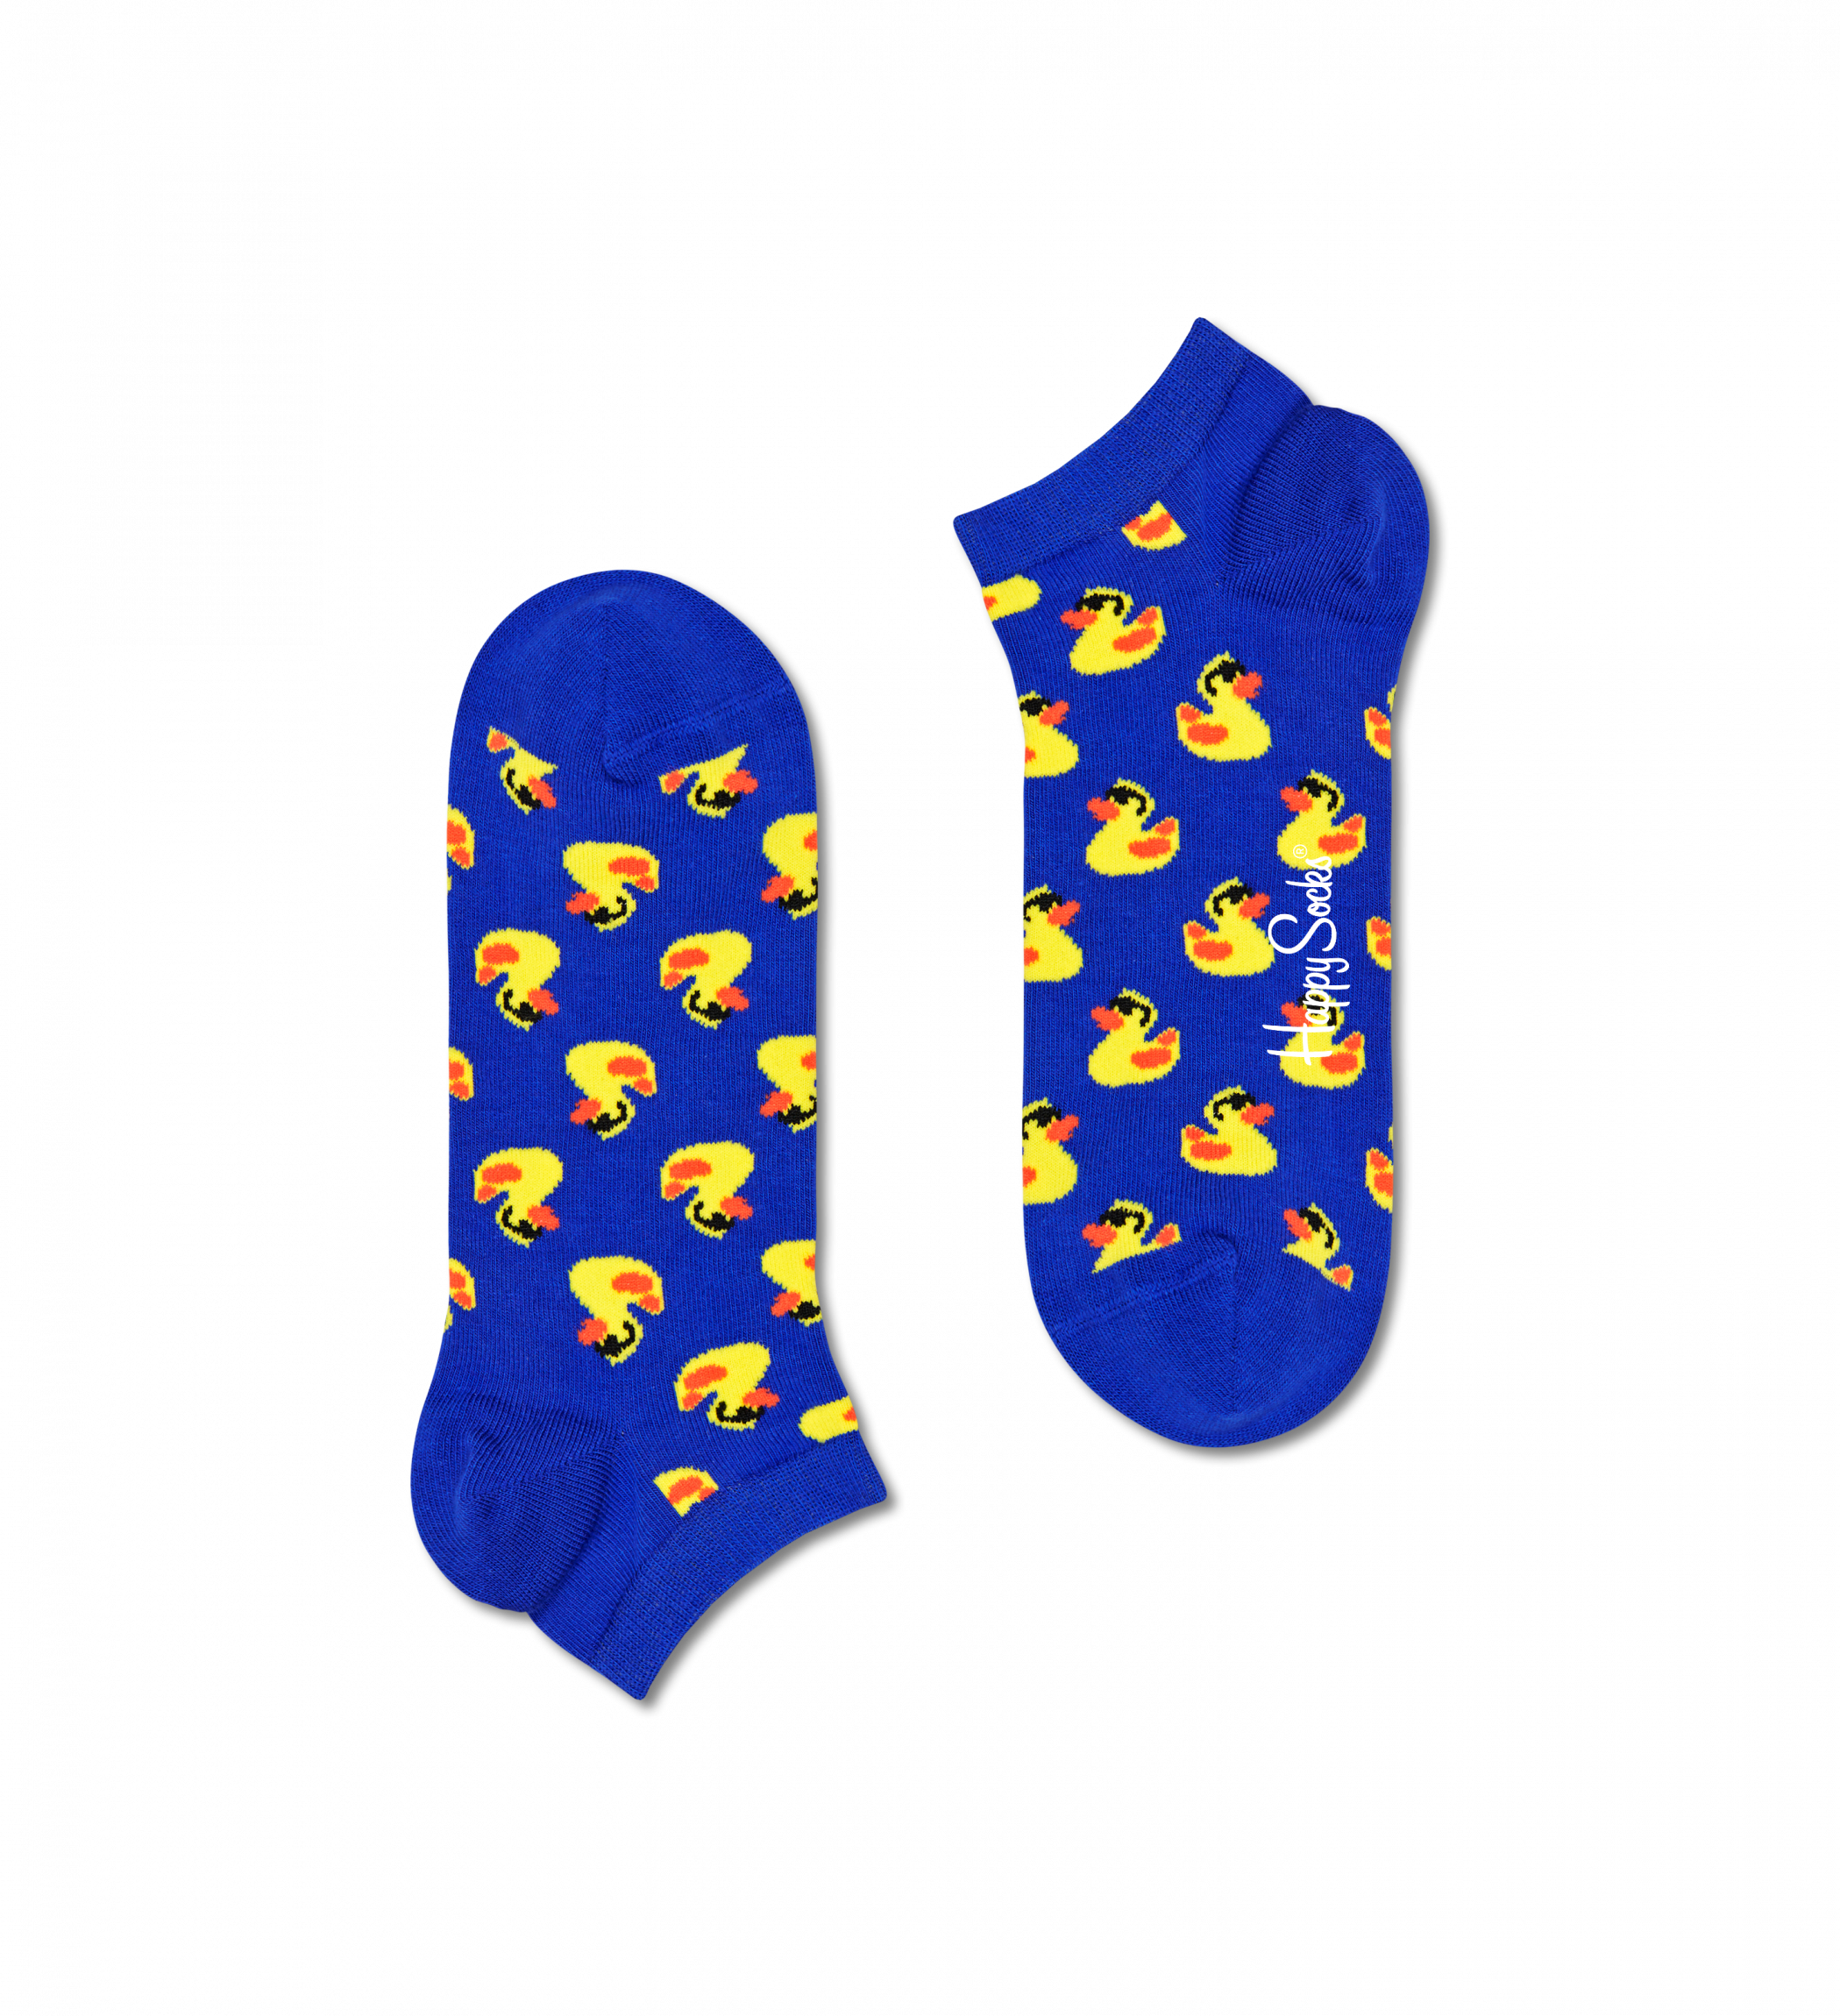 Modré nízké ponožky Happy Socks s kačenkami, vzor Rubber Duck